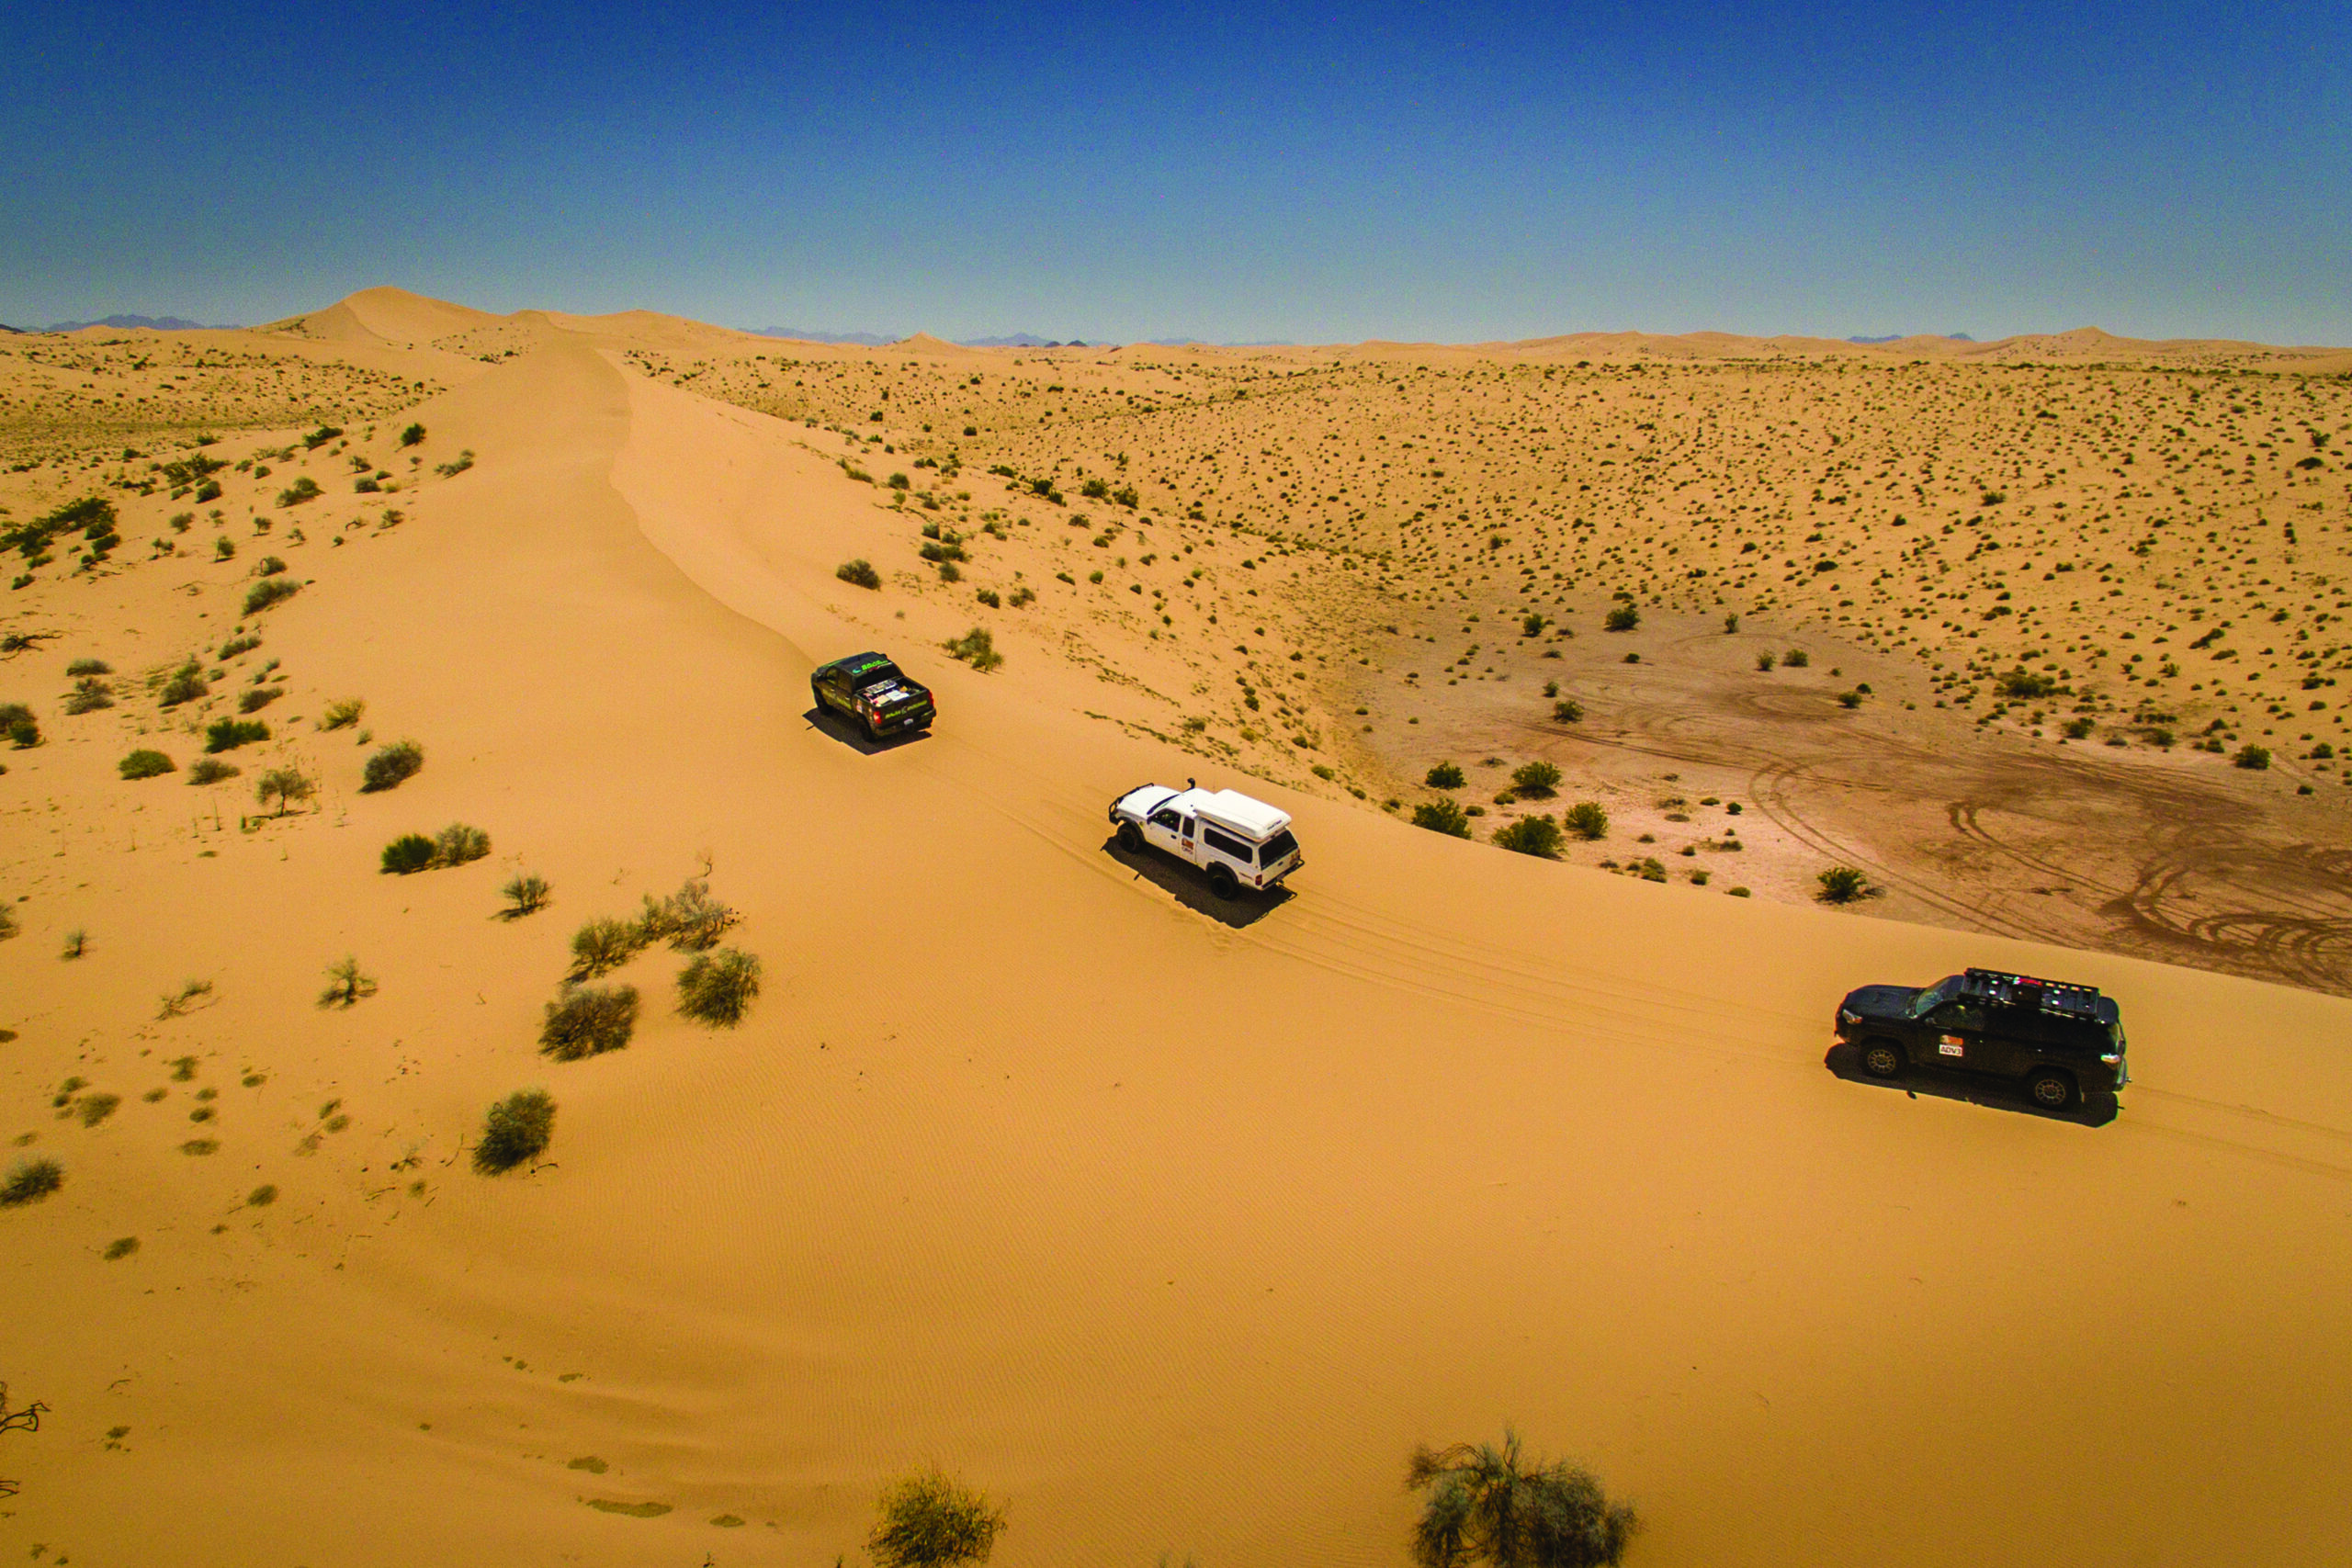 Sand Dune Adventures in Mexico